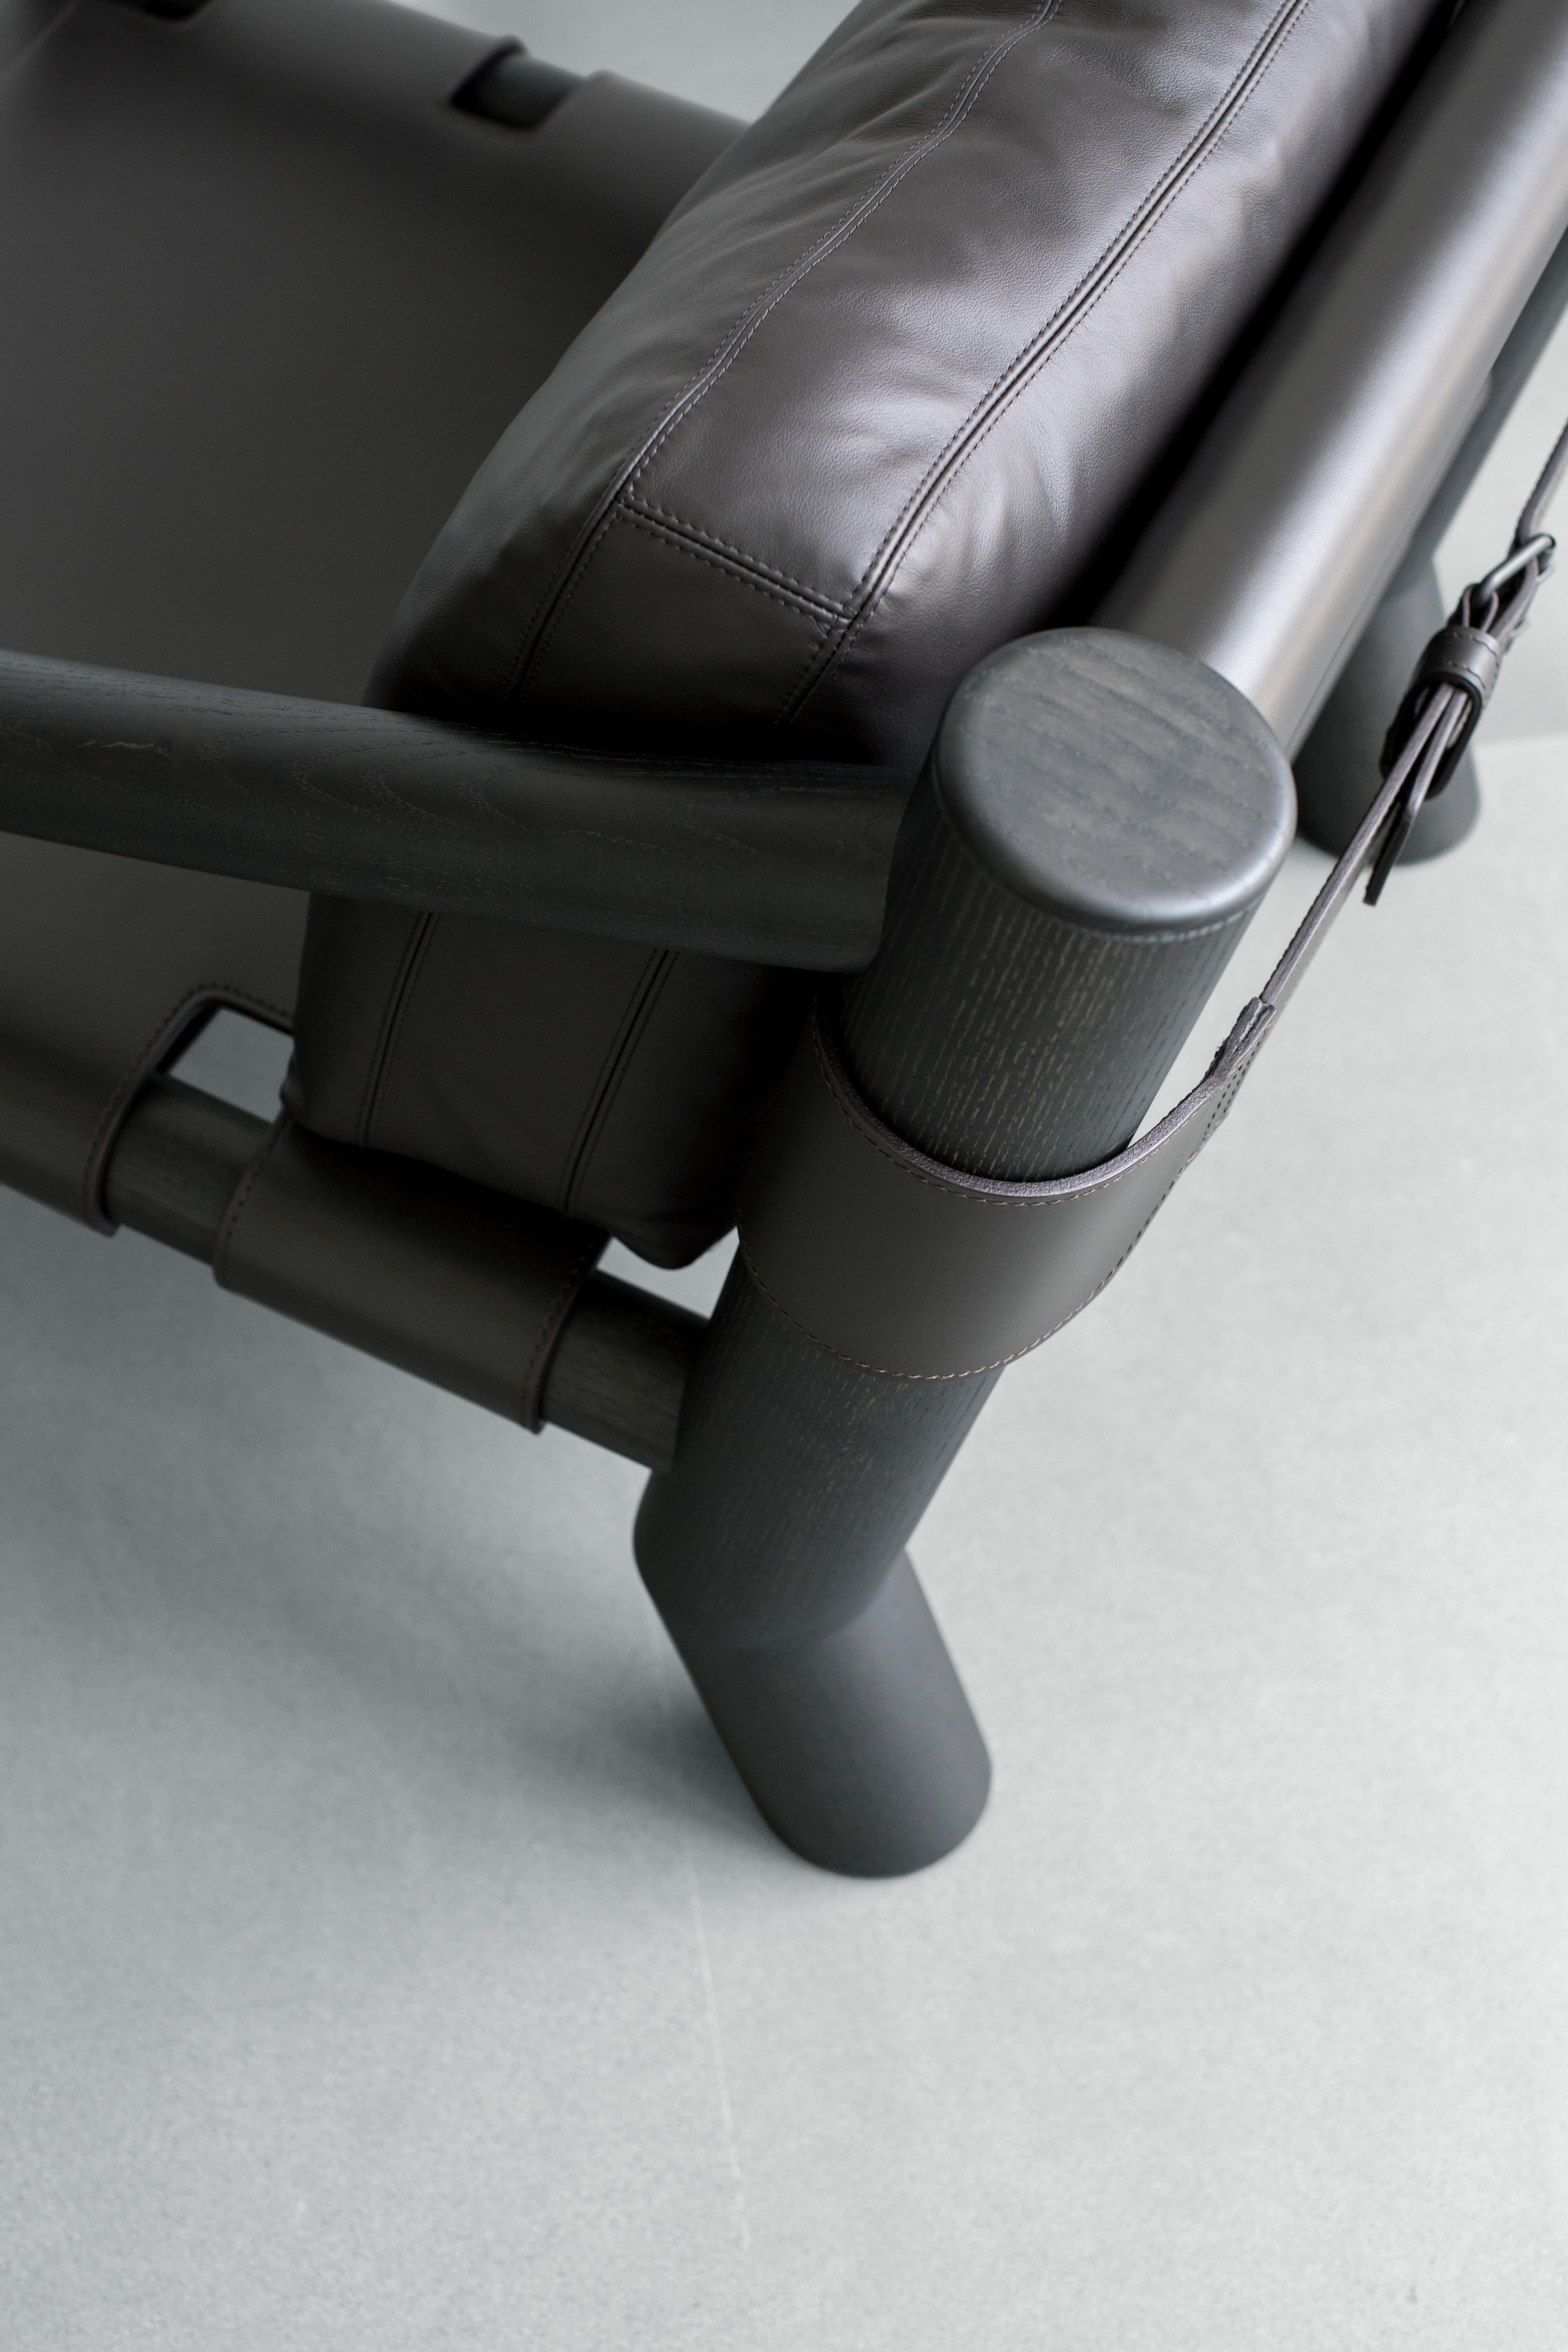 Leather Customizable Tacchini Elephant Lounge Chair & Ottoman by Karen Chekerdijan For Sale